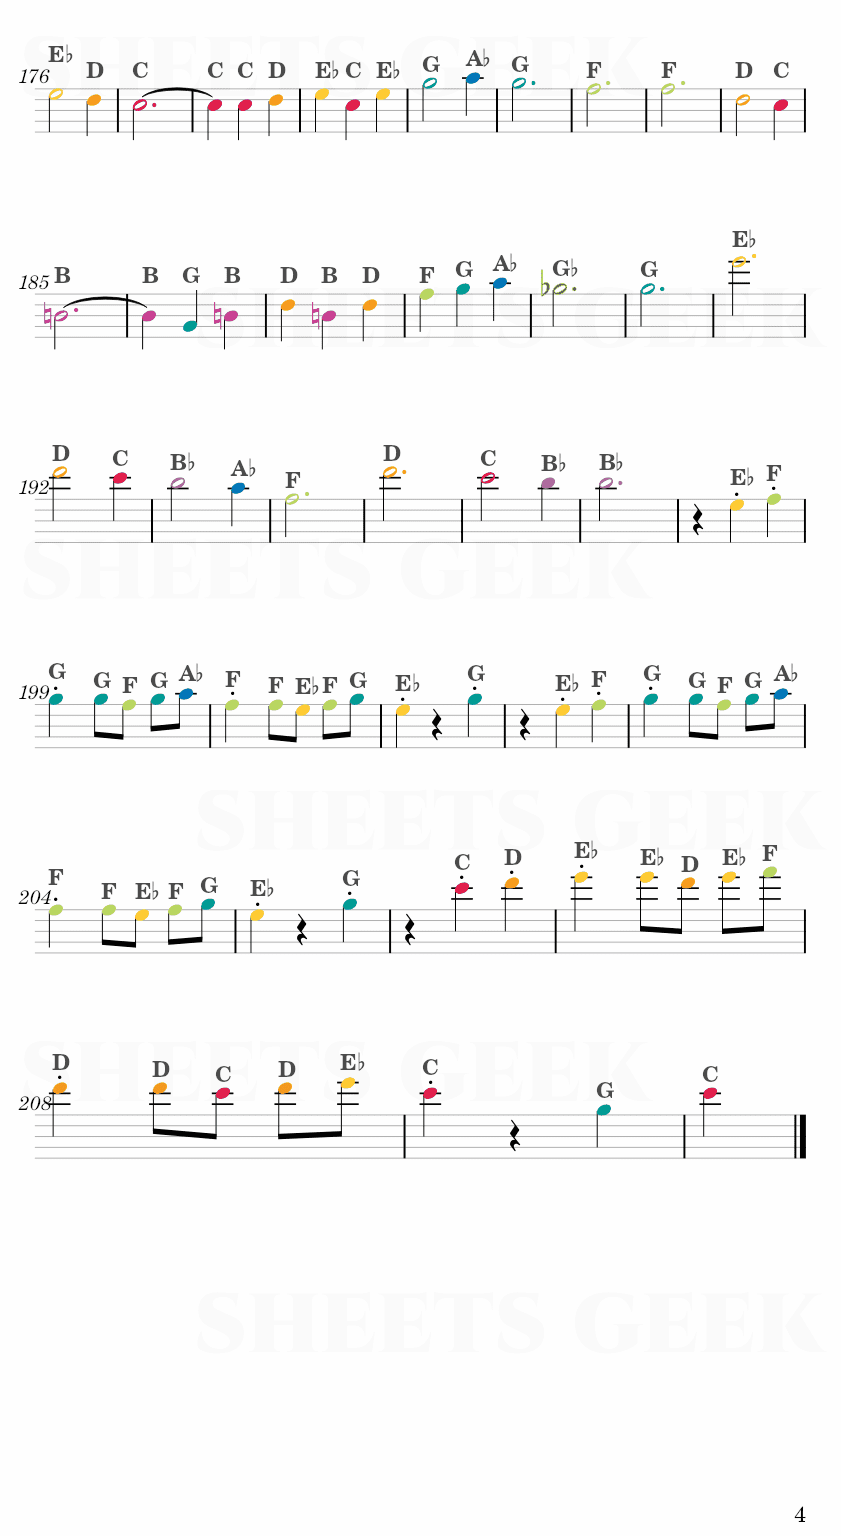 Waltz No. 2 - Dmitri Shostakovich Easy Sheet Music Free for piano, keyboard, flute, violin, sax, cello page 4